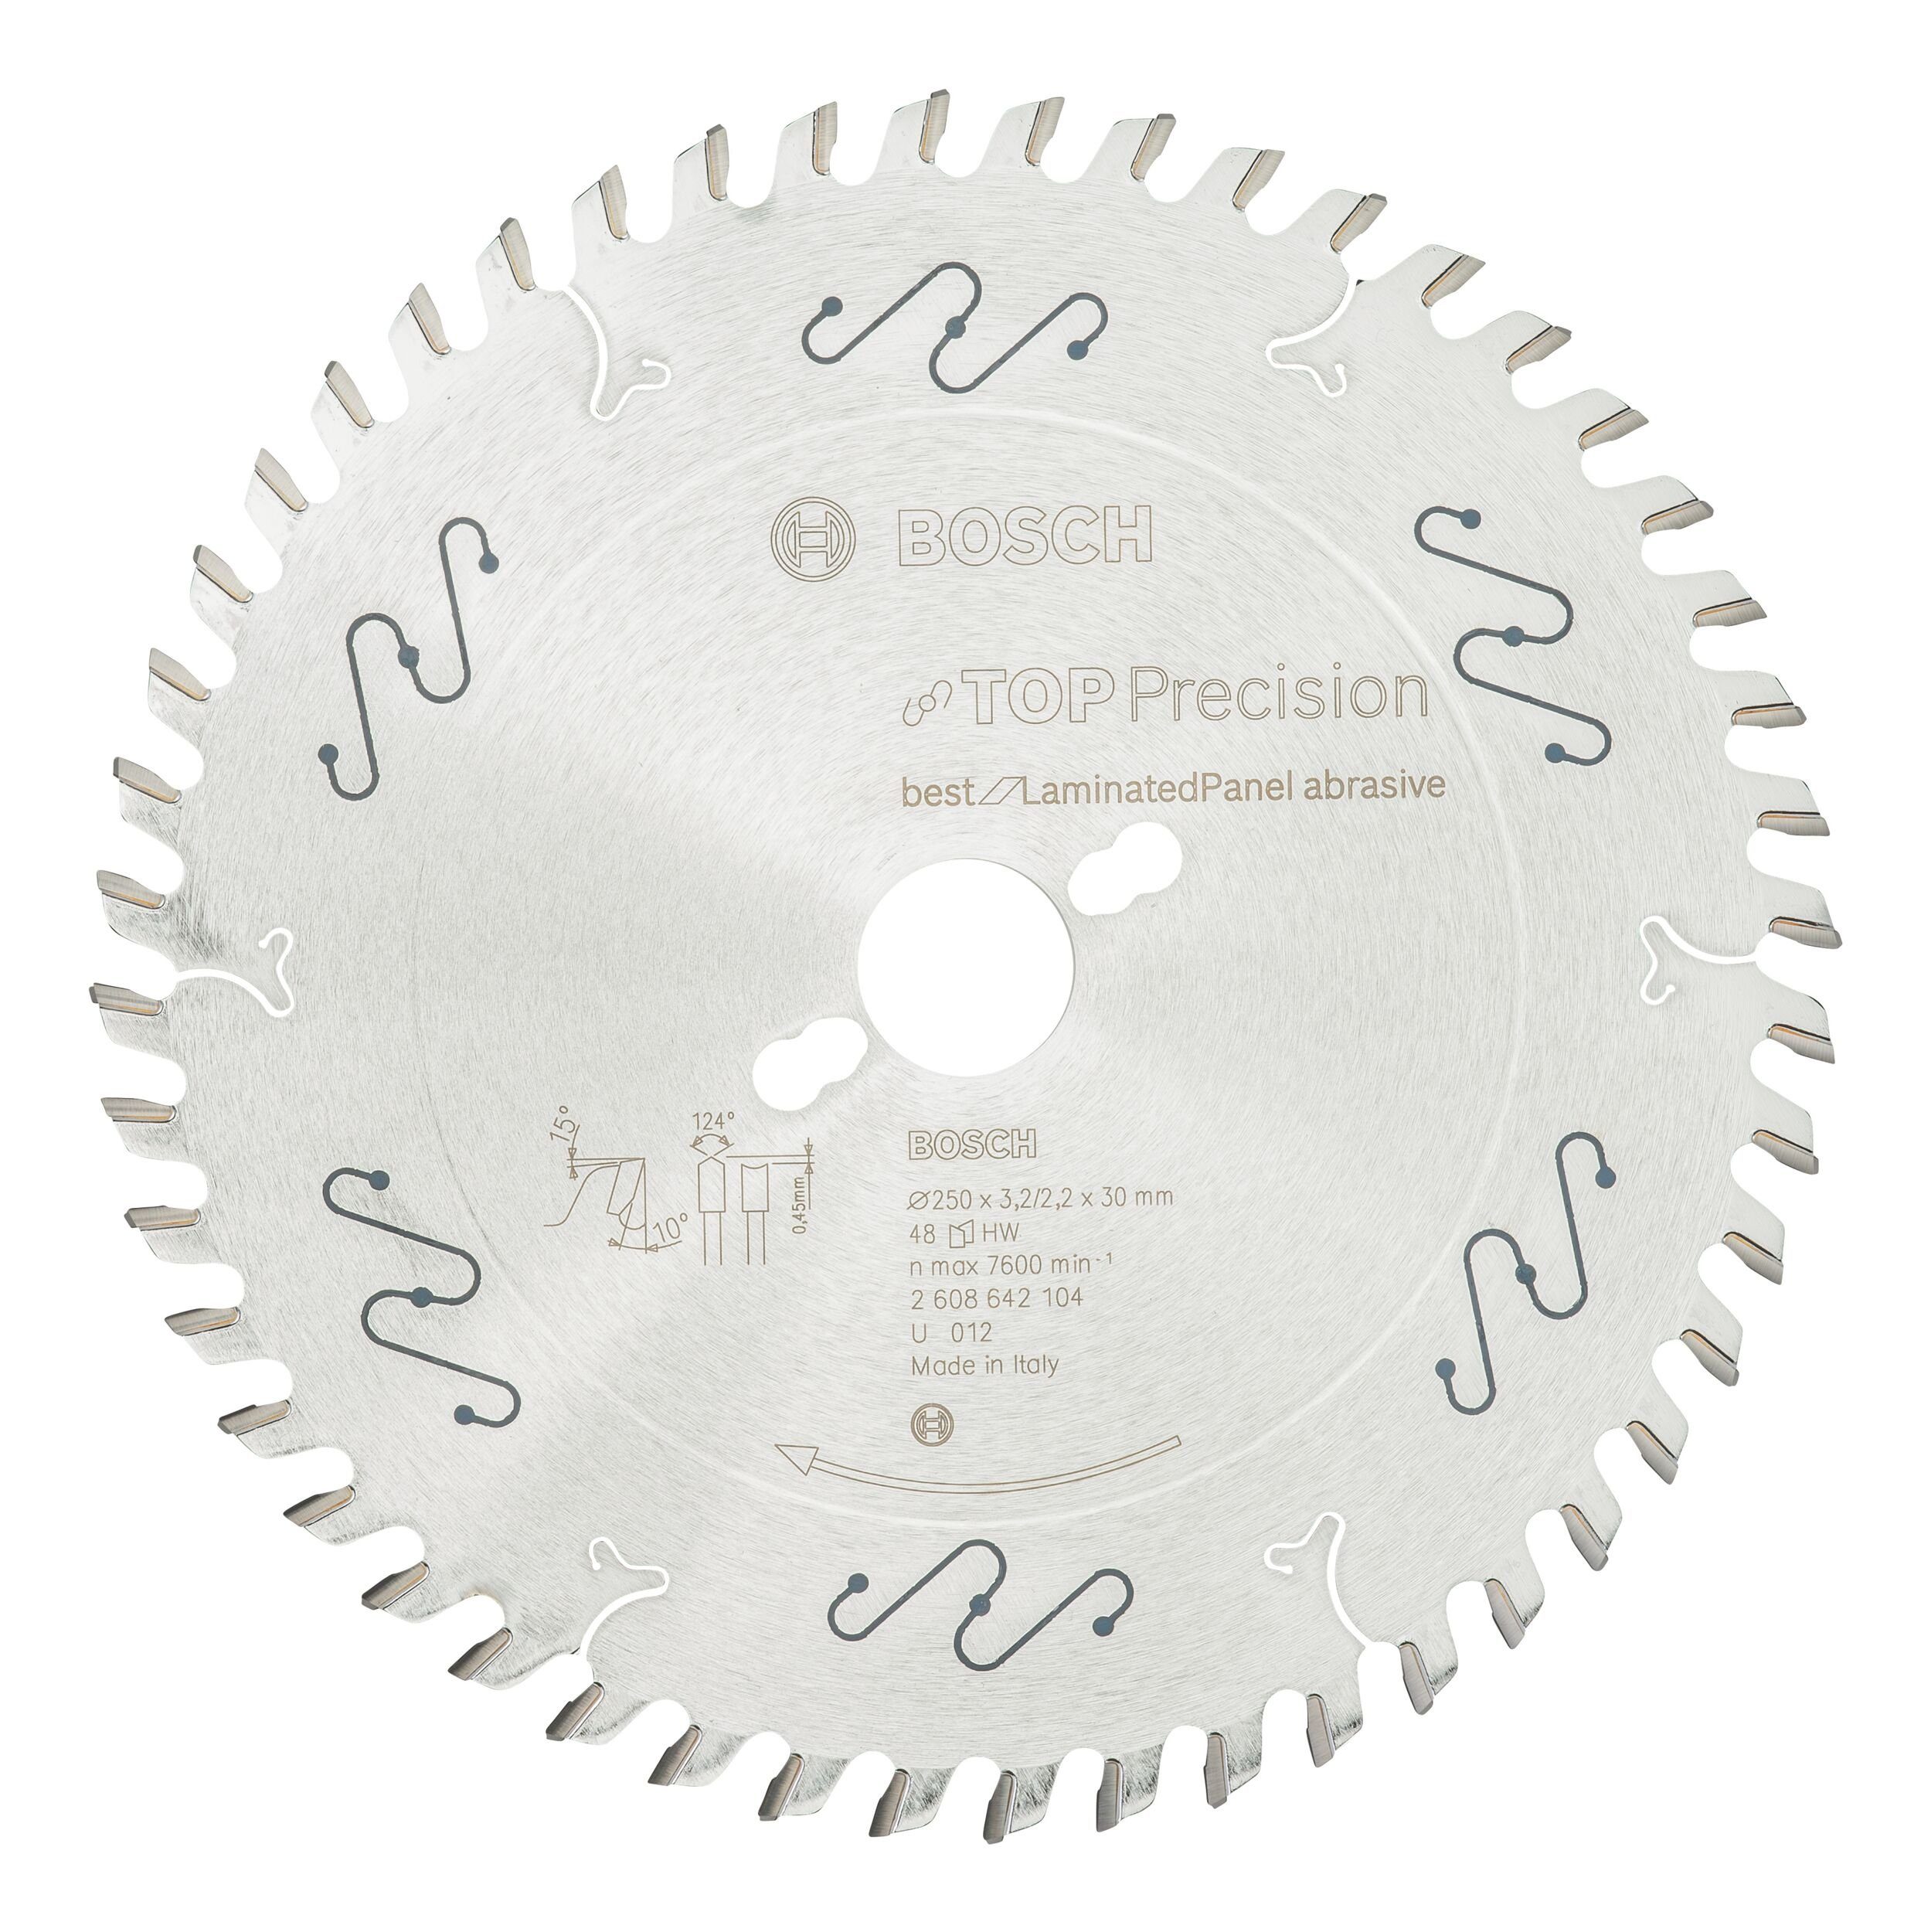 BOSCH Kreissägeblatt, Top Precision Best for Laminated Panel Abrasive 48Z - 250 x 30 x 3